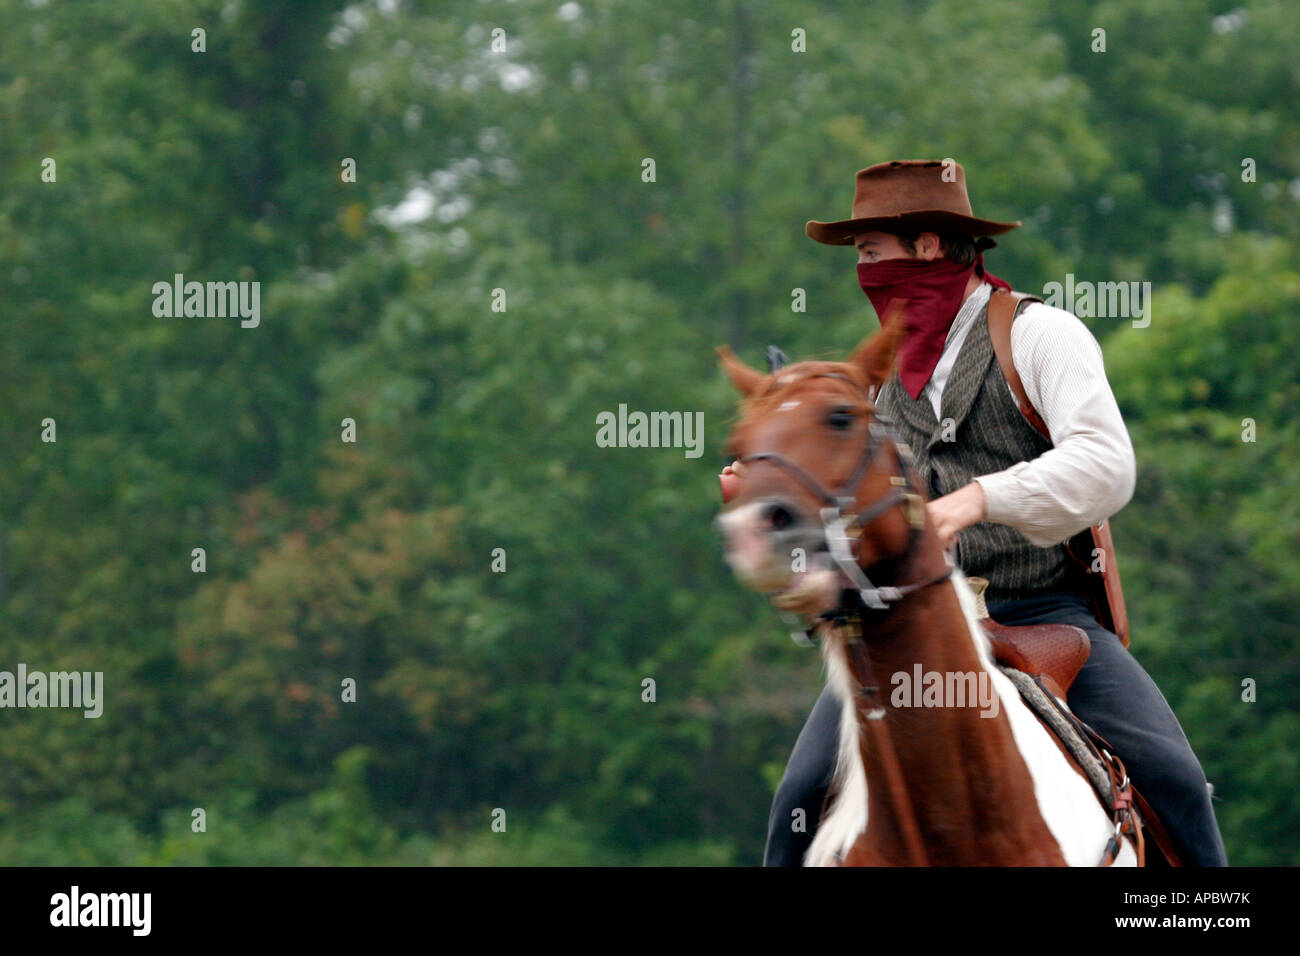 A cowboy bandit on horseback getting ready for a shootout Stock Photo